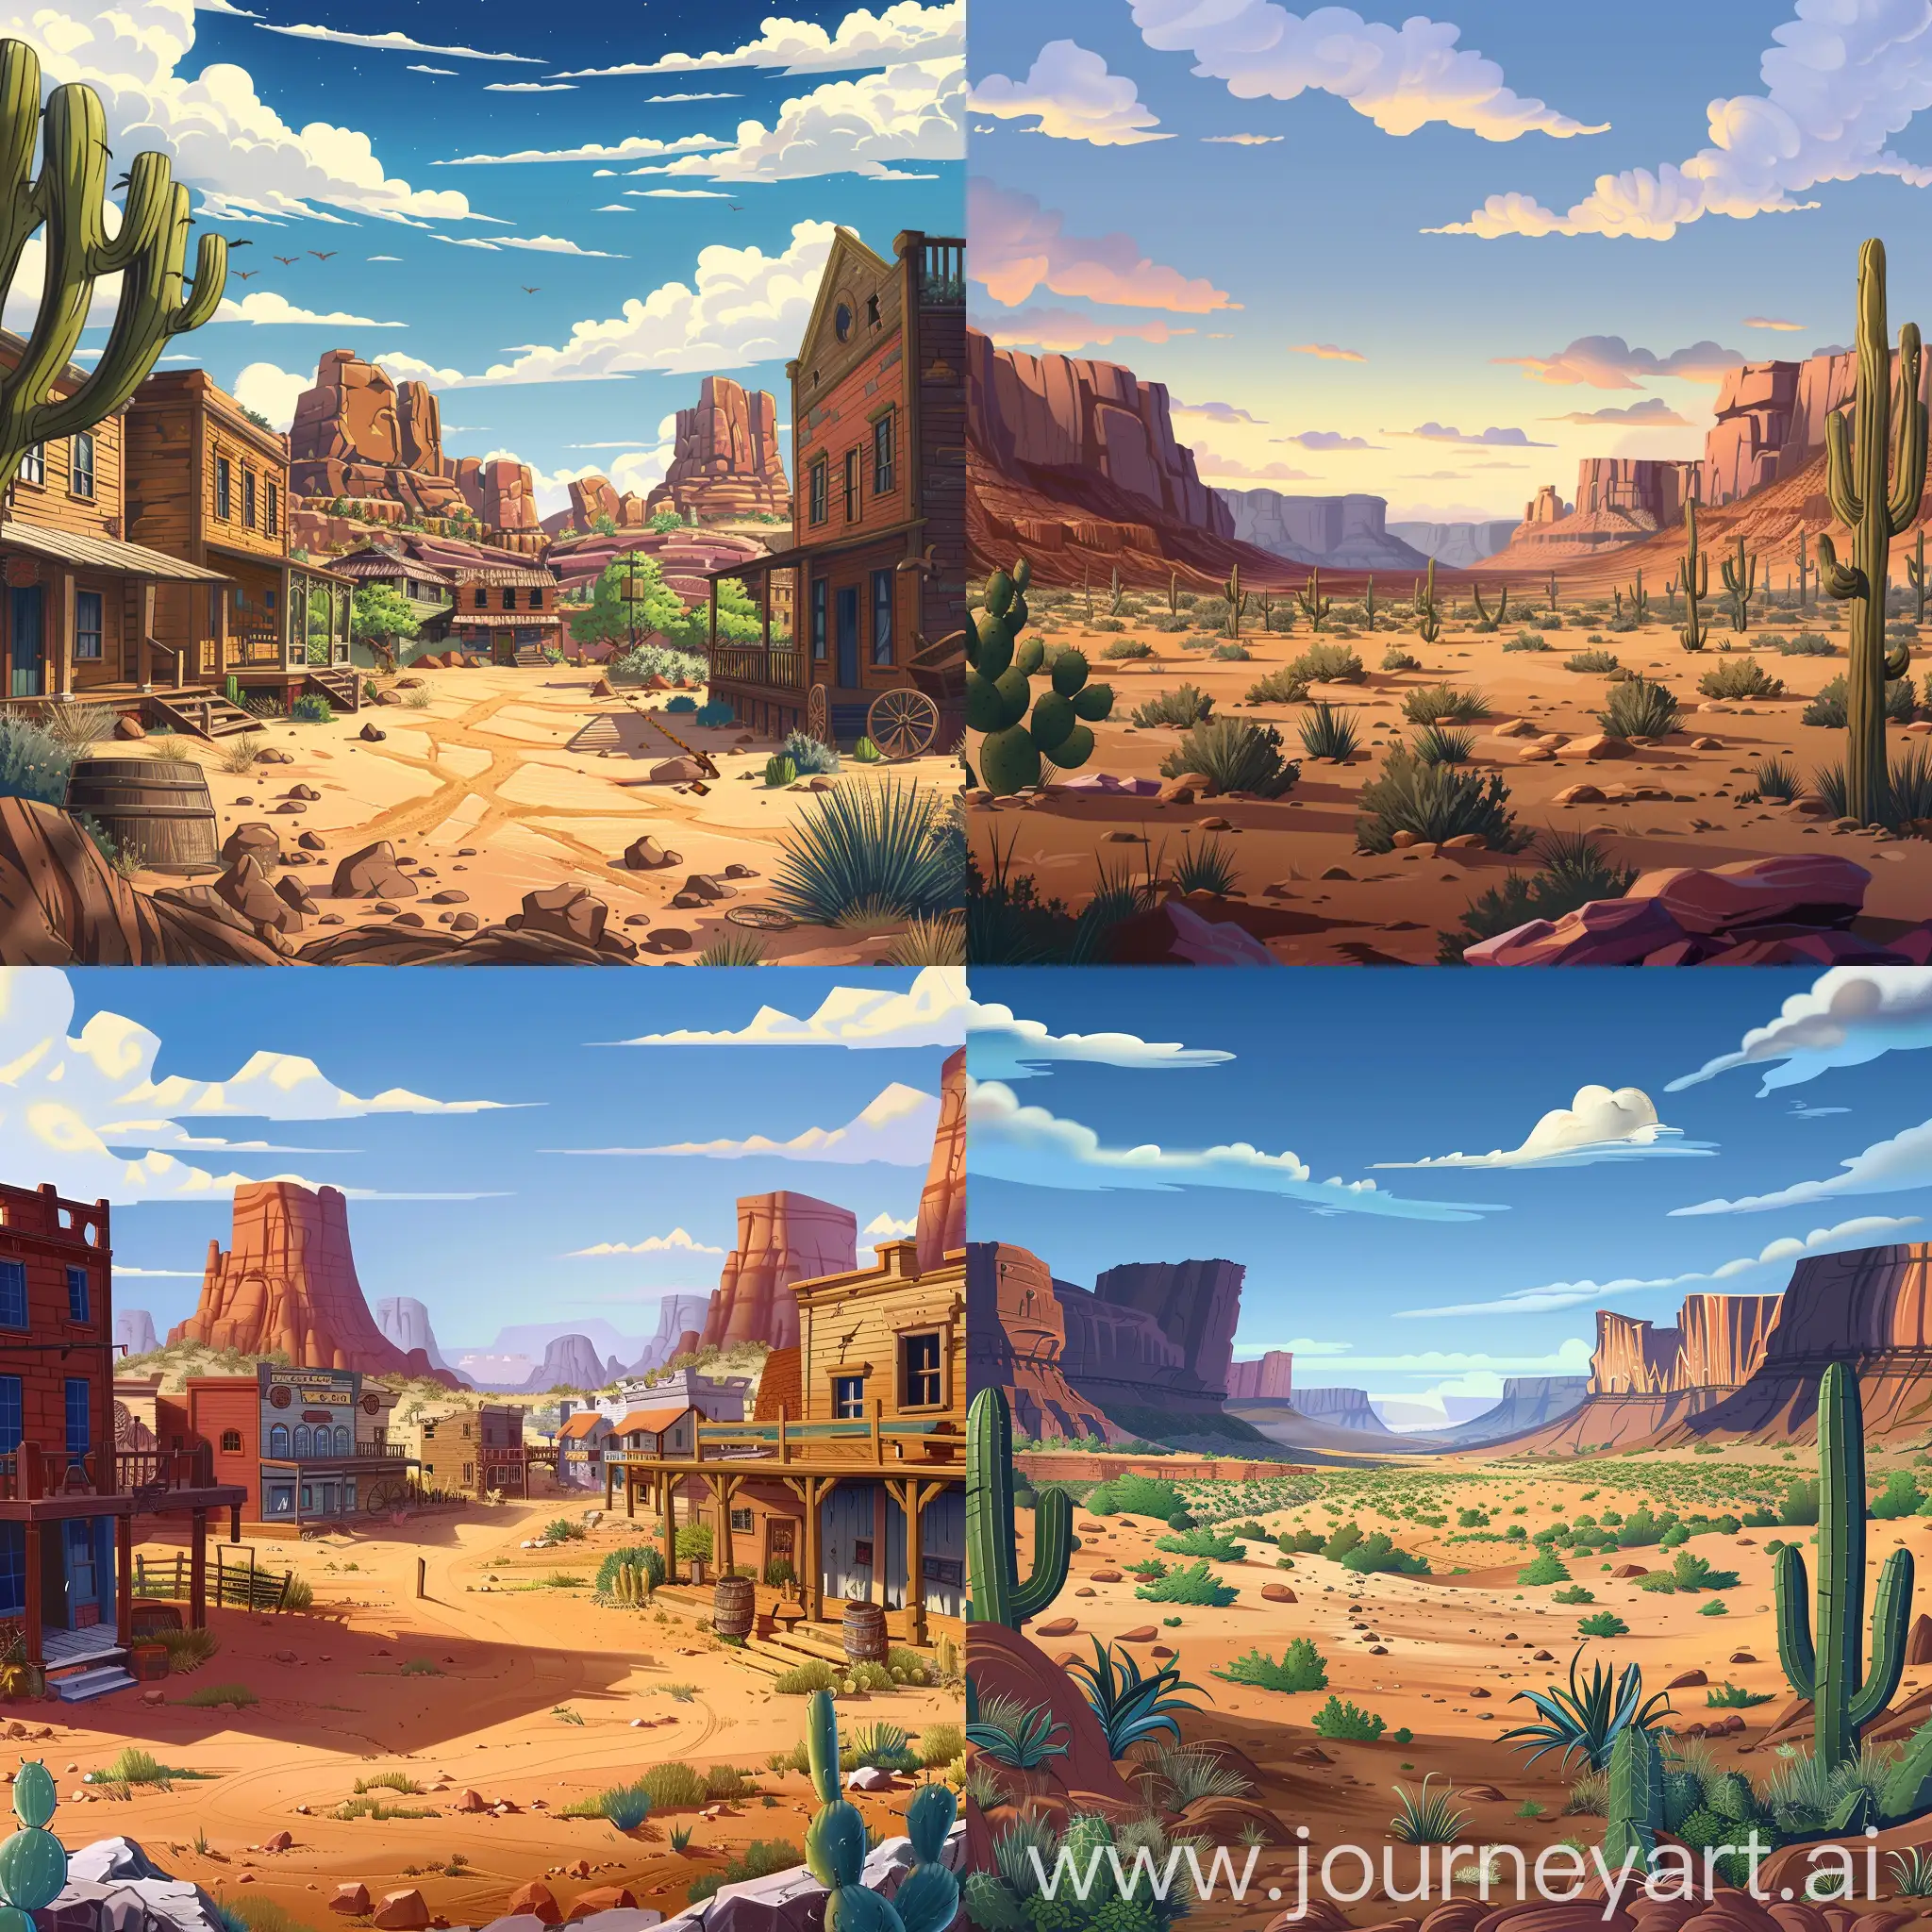 disney animation background wild west scene